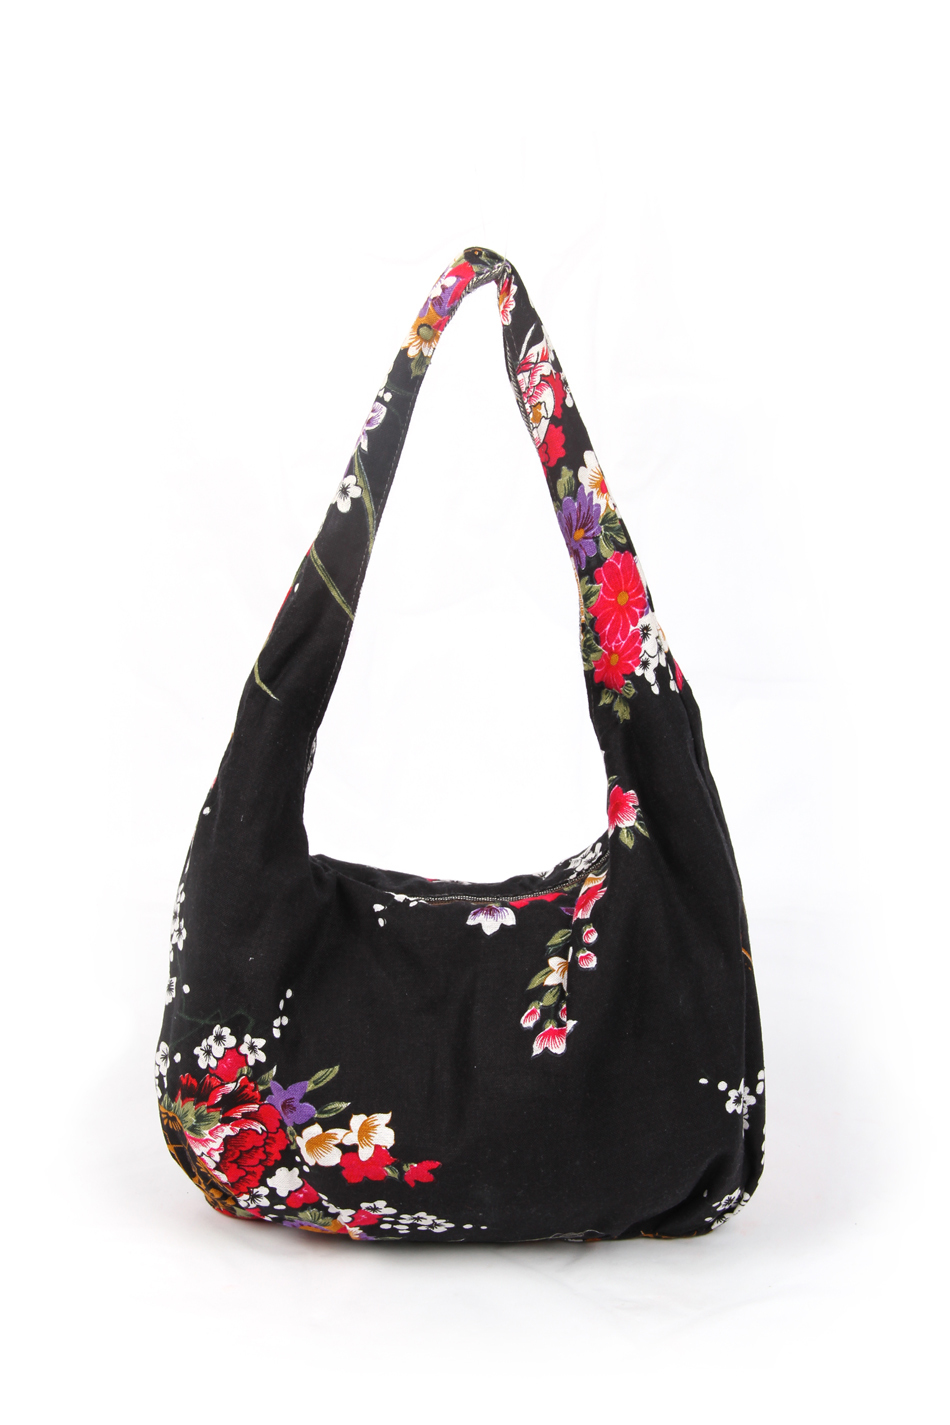 ... Pattern Jean Printed Flower Shoulder Bag Retro Women Casual Hobo